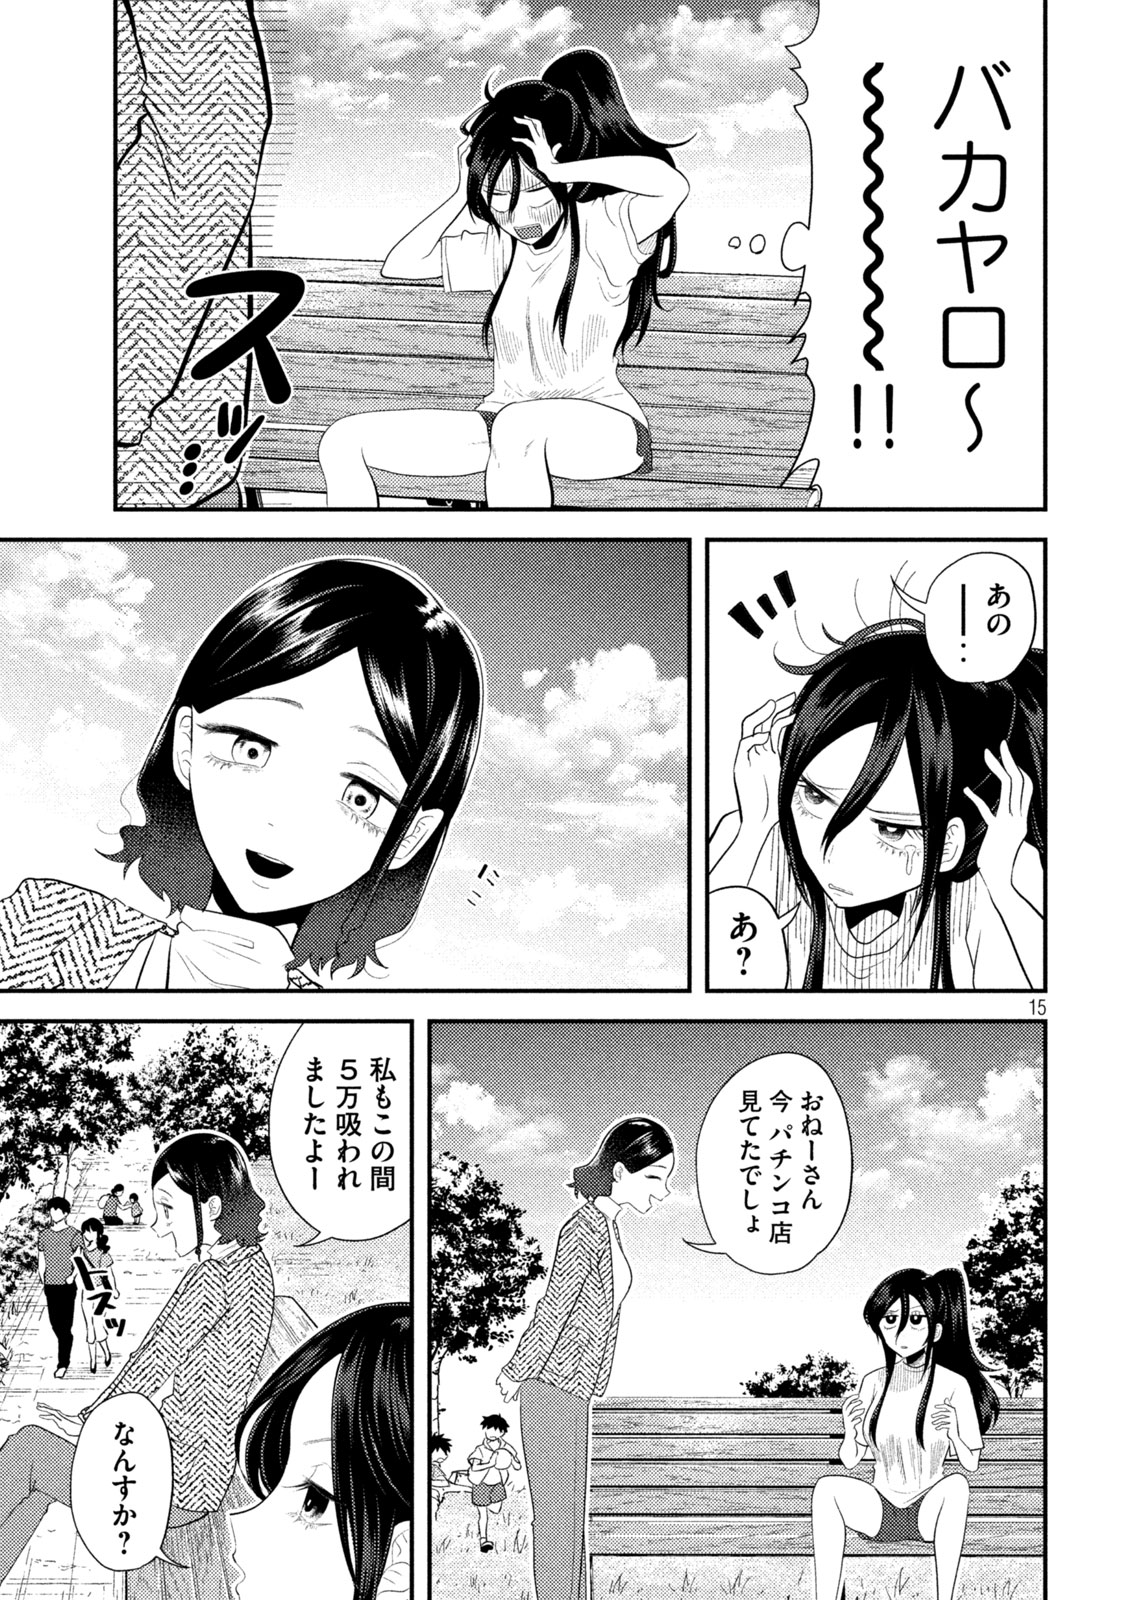 Heisei Haizanhei Sumire-chan - Chapter 13 - Page 15